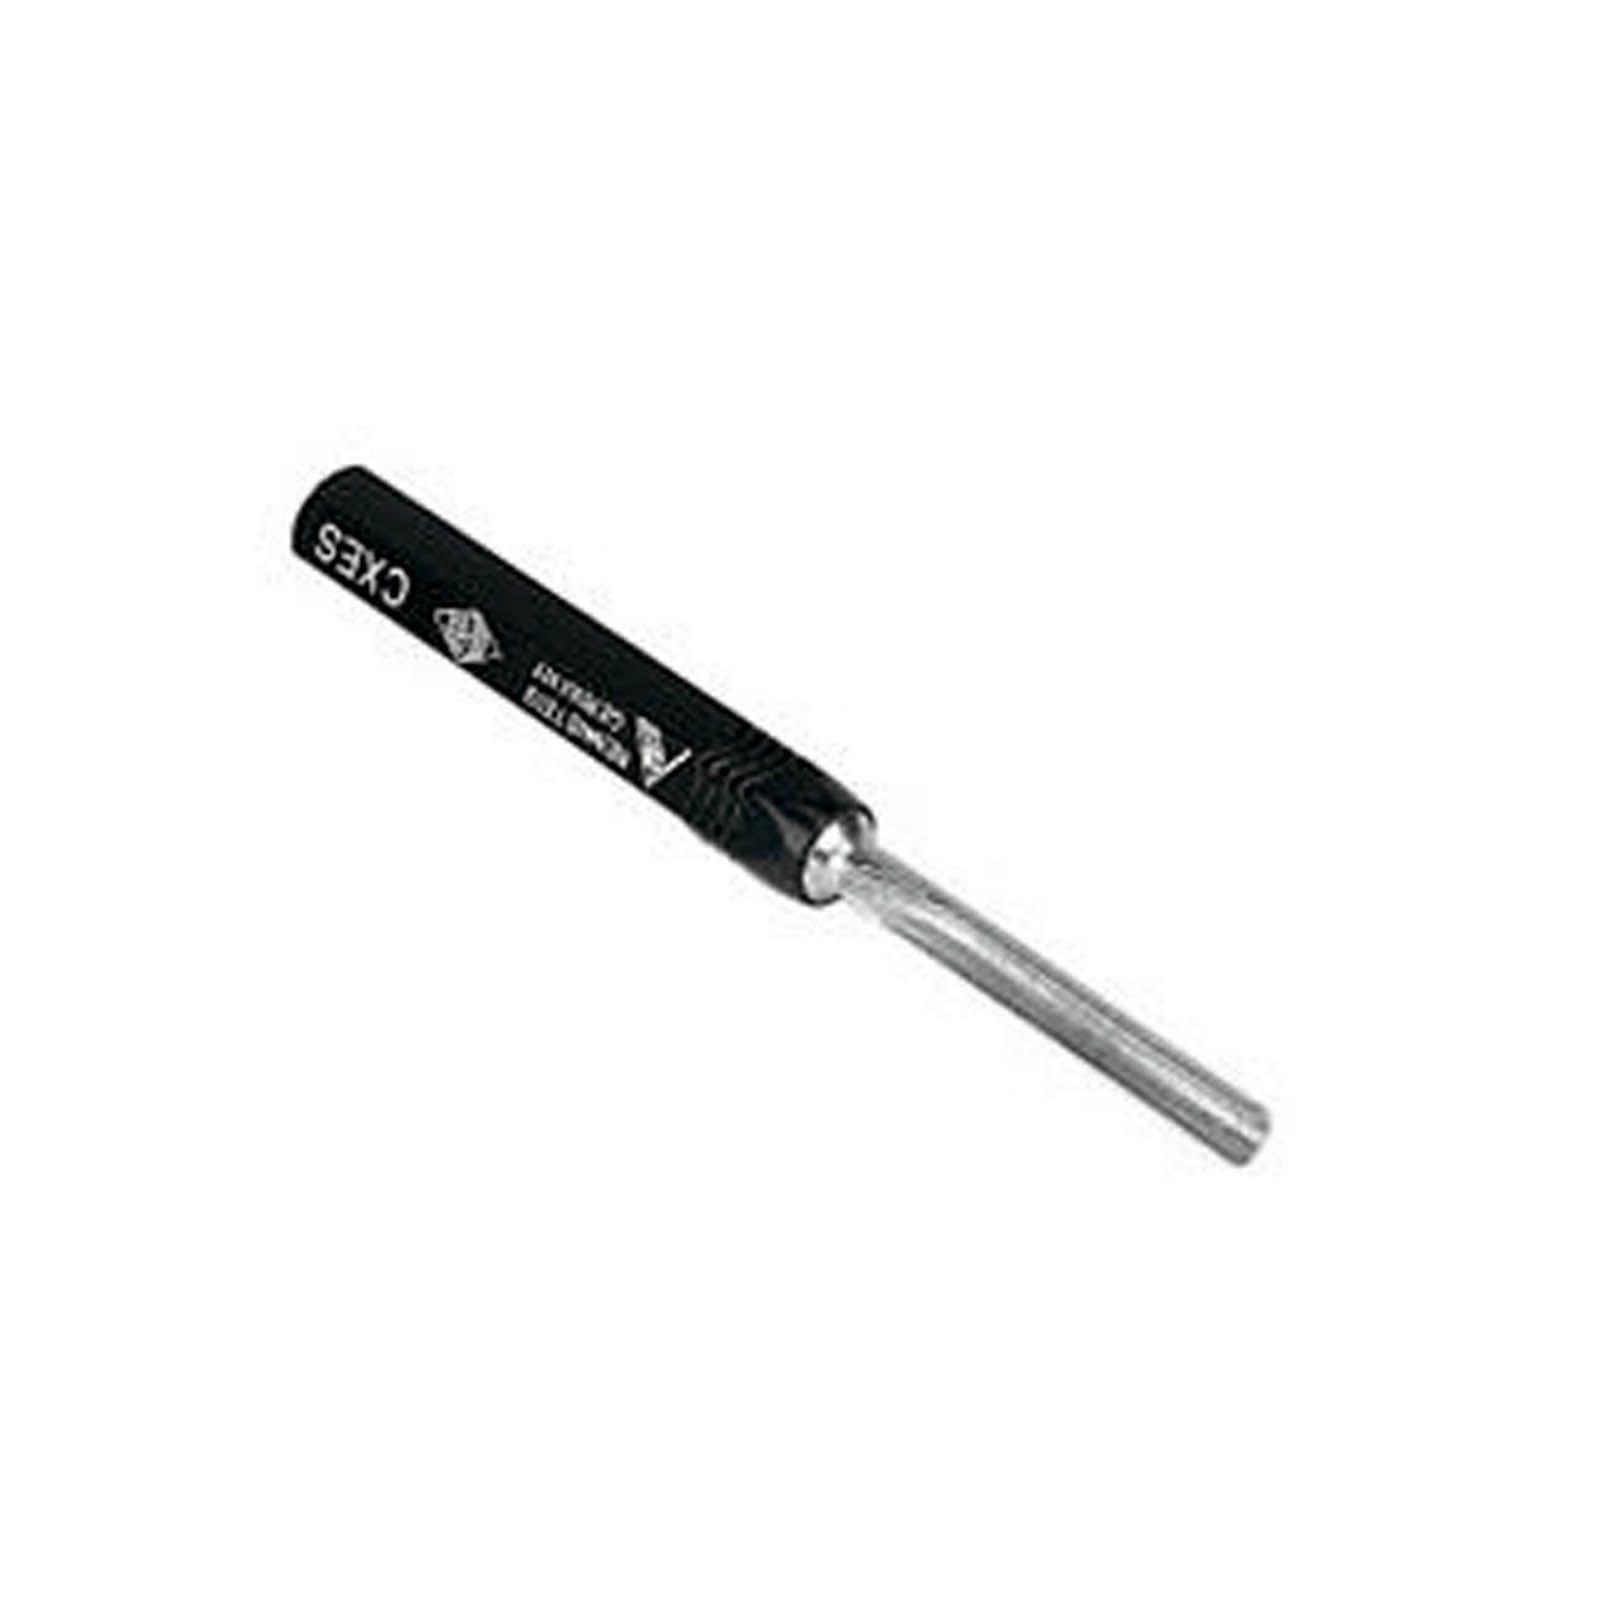 Mencom CXES 40amp Crimp Pin Extraction Tool